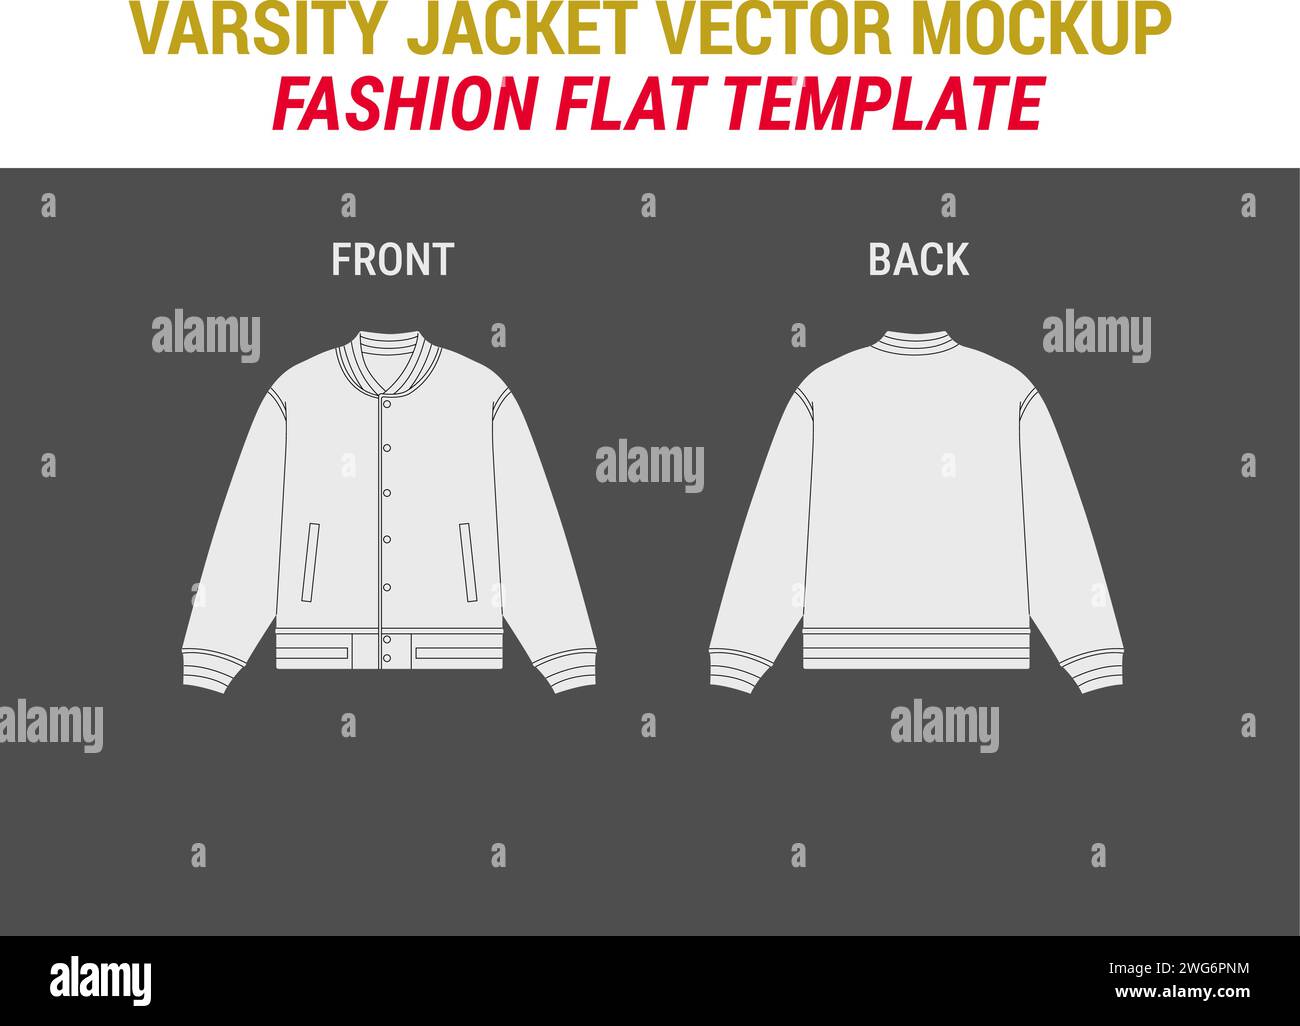 Varsity Jacket Fashion Flat Template Bomber Jacket Flat Vector Illustration Varsity Jacket Mockup Letterman Jacket Flat CAD Mockup Stock Vector